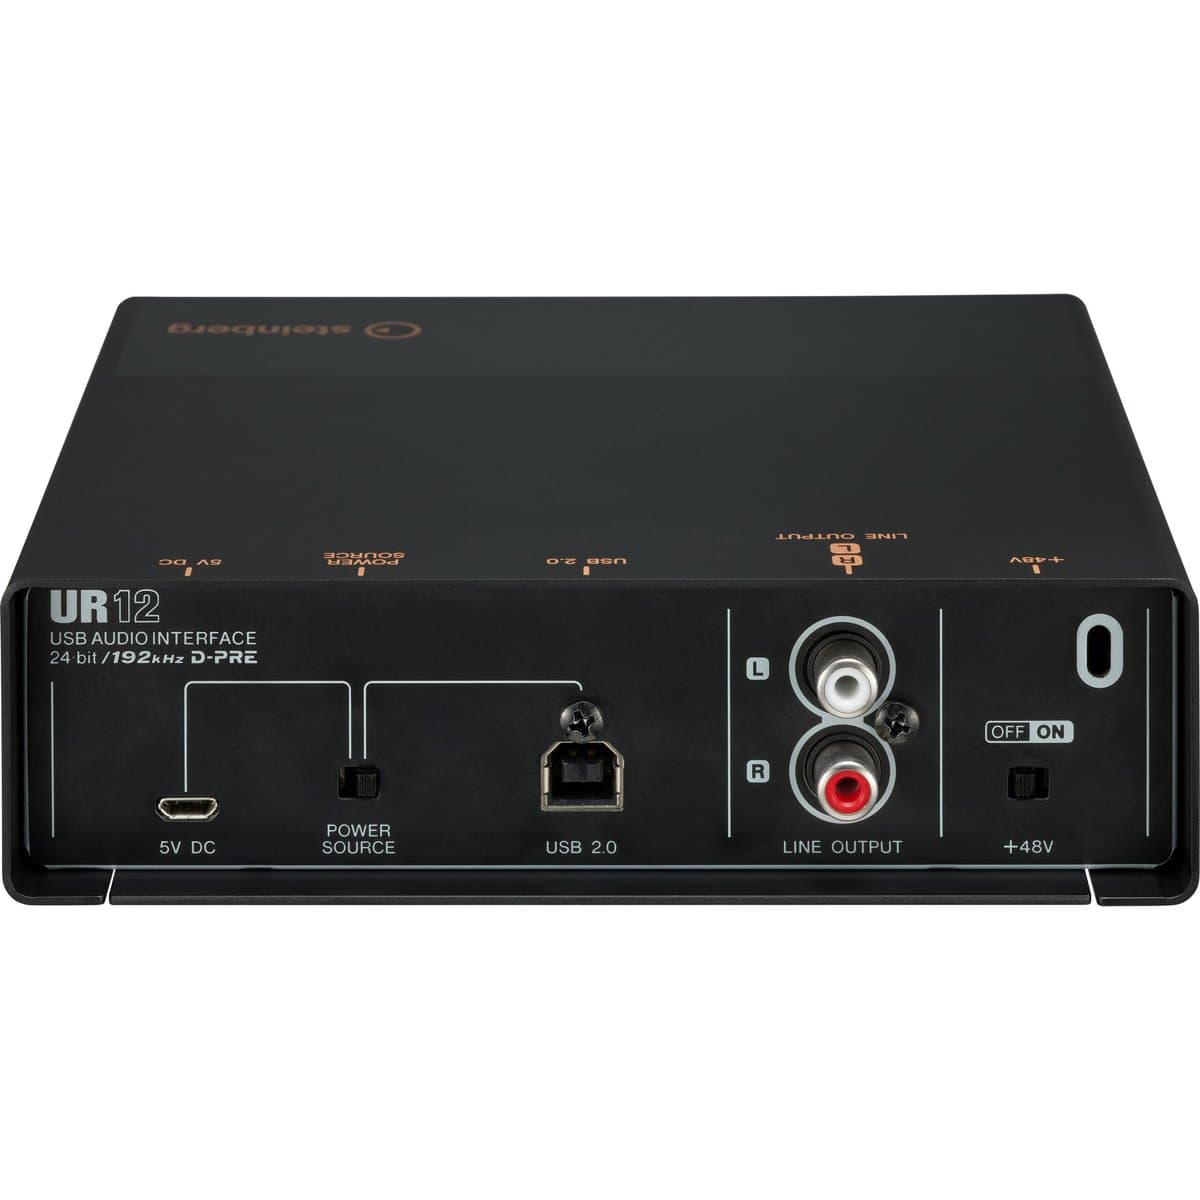 Steinberg UR12B PS USB Audio Interface Podcast Starter Pack